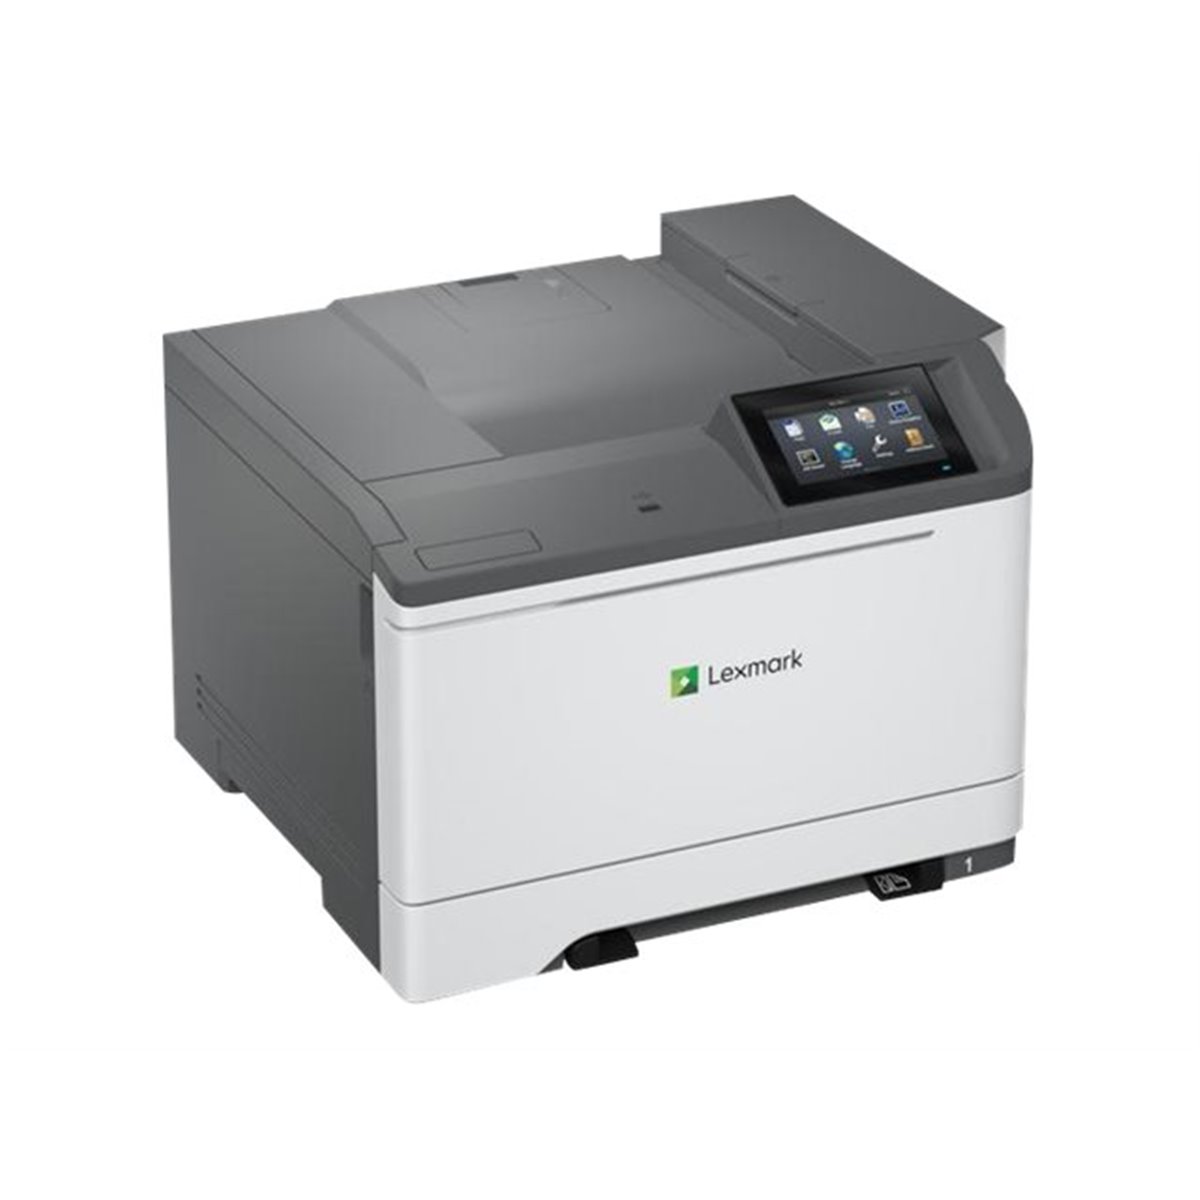 Lexmark CS632dwe Color Singlefunction Printer HV EMEA 40ppm - Printer - Colored